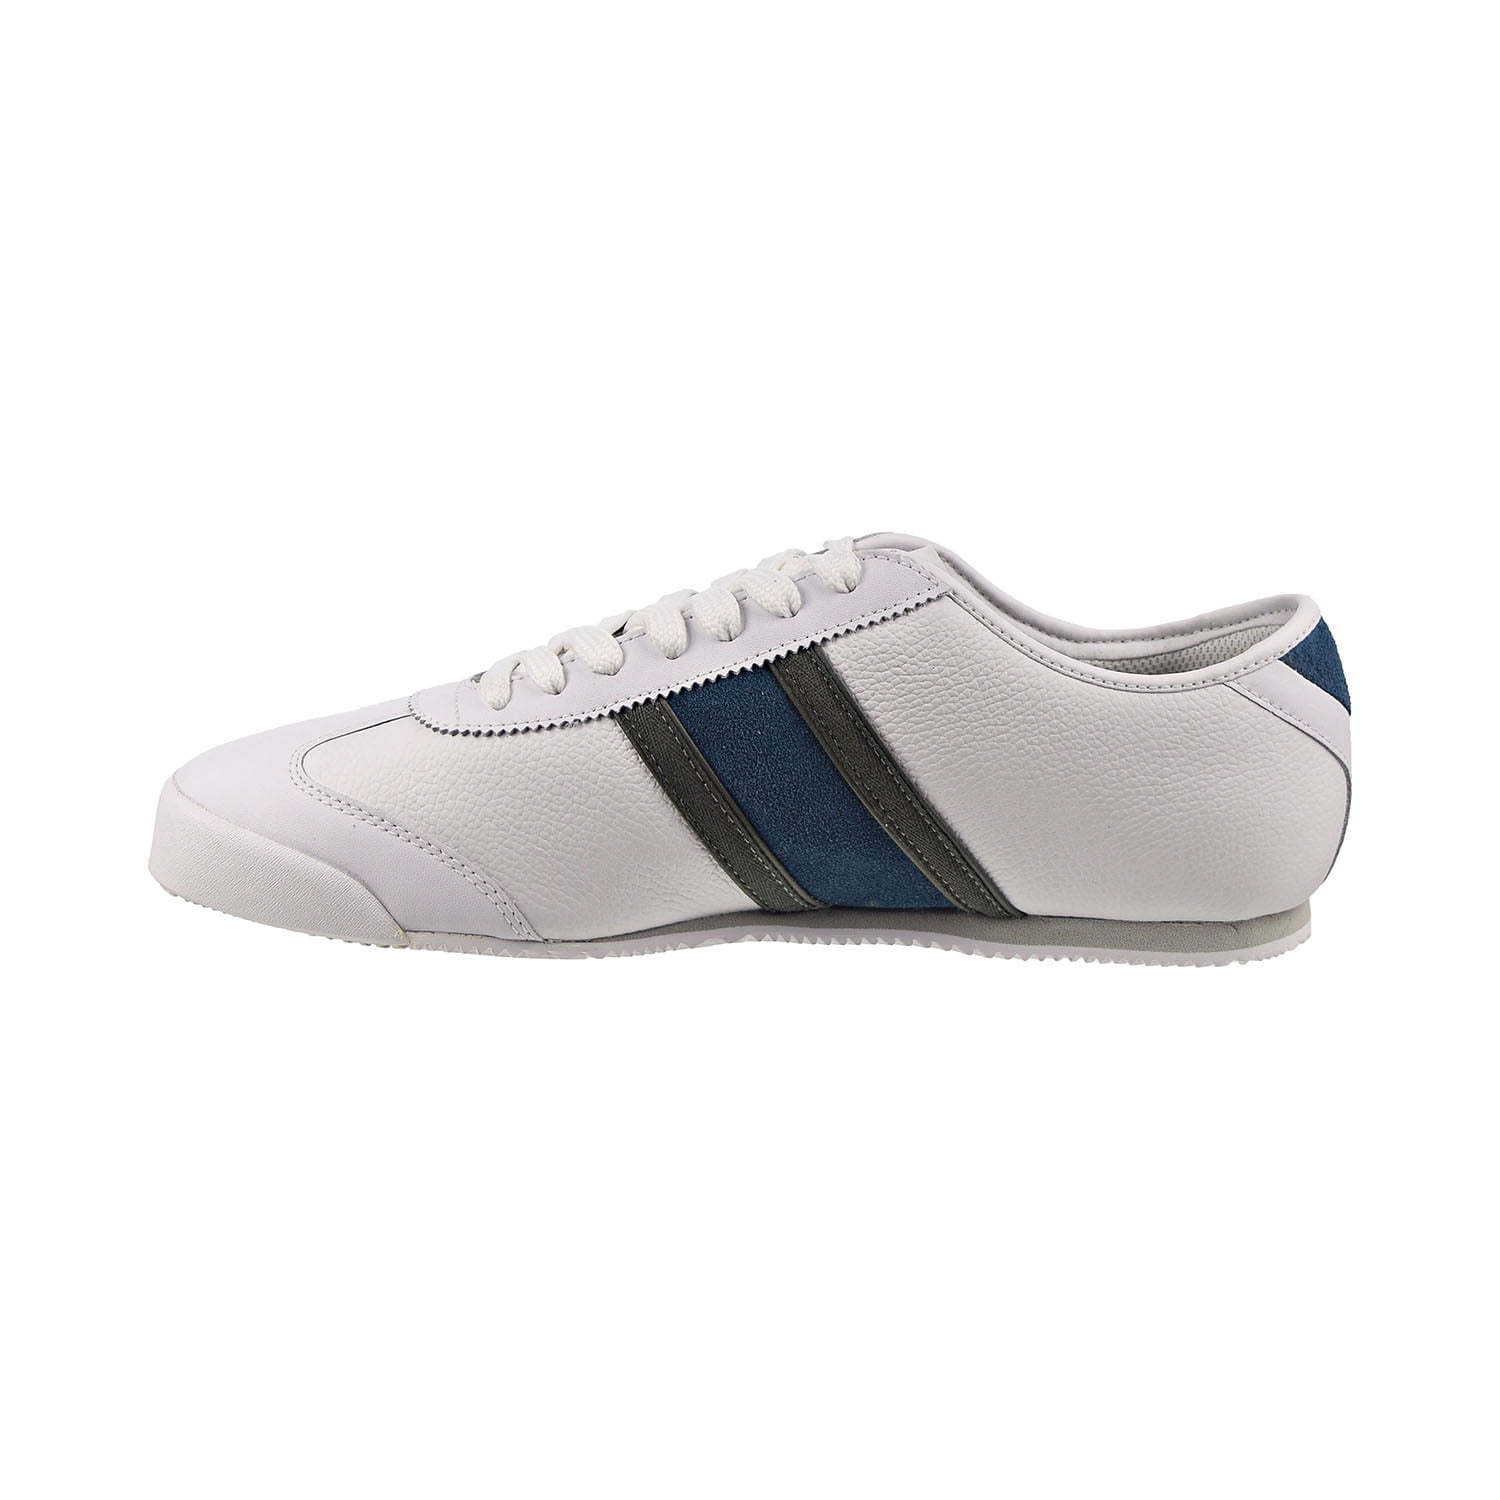 Lacoste Tourelle WS SPM Men's Shoes White-Dark Green 7-22spm6171-1r5 - Walmart.com